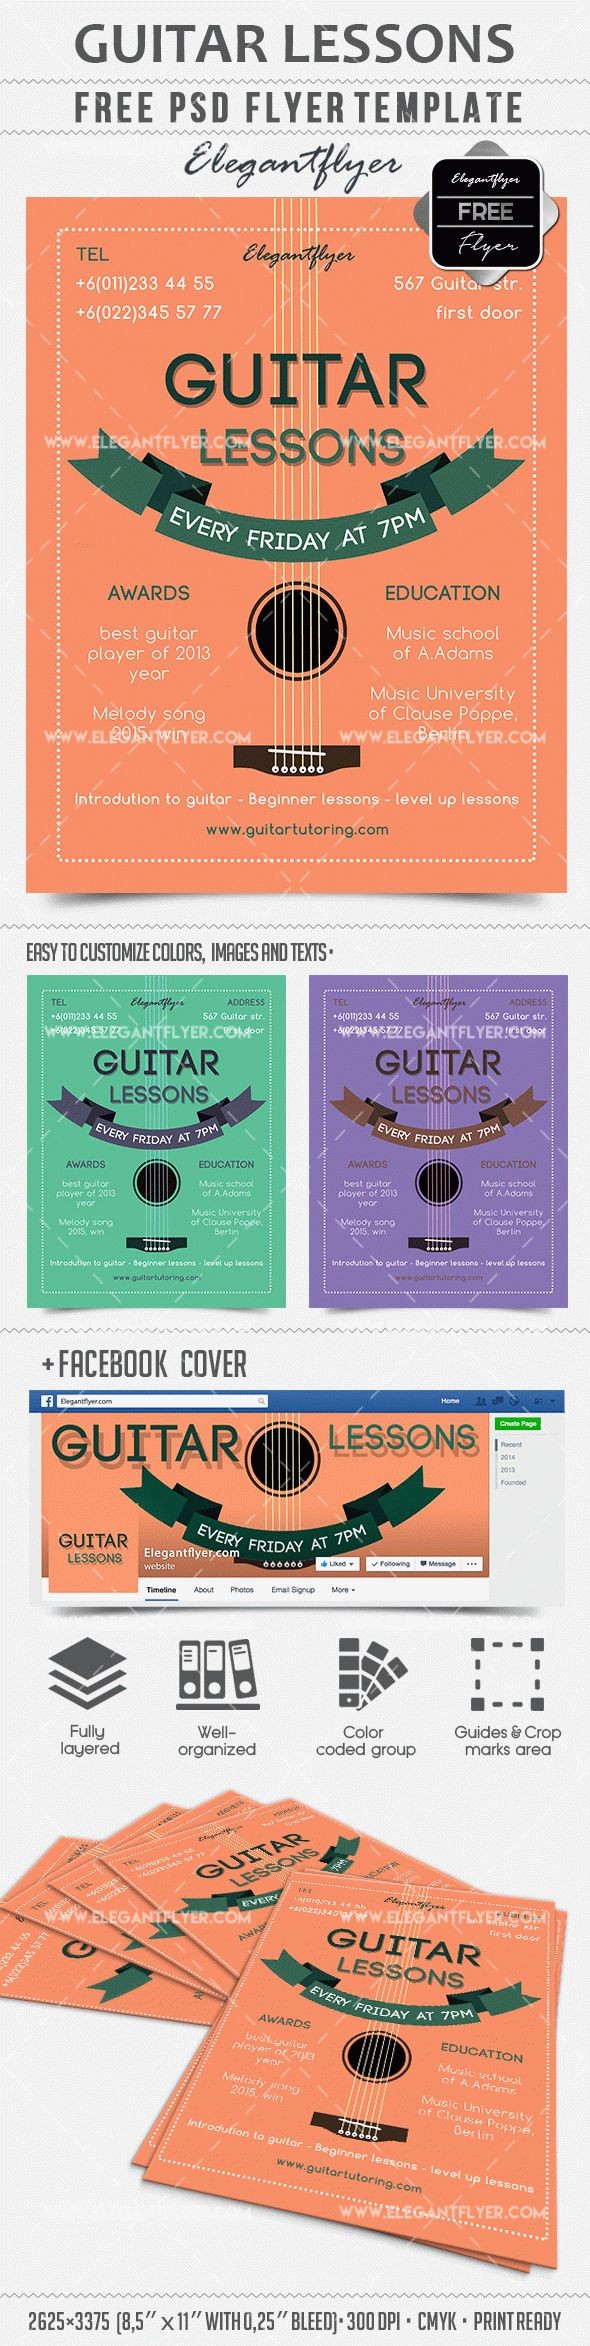 Guitar Lessons by ElegantFlyer